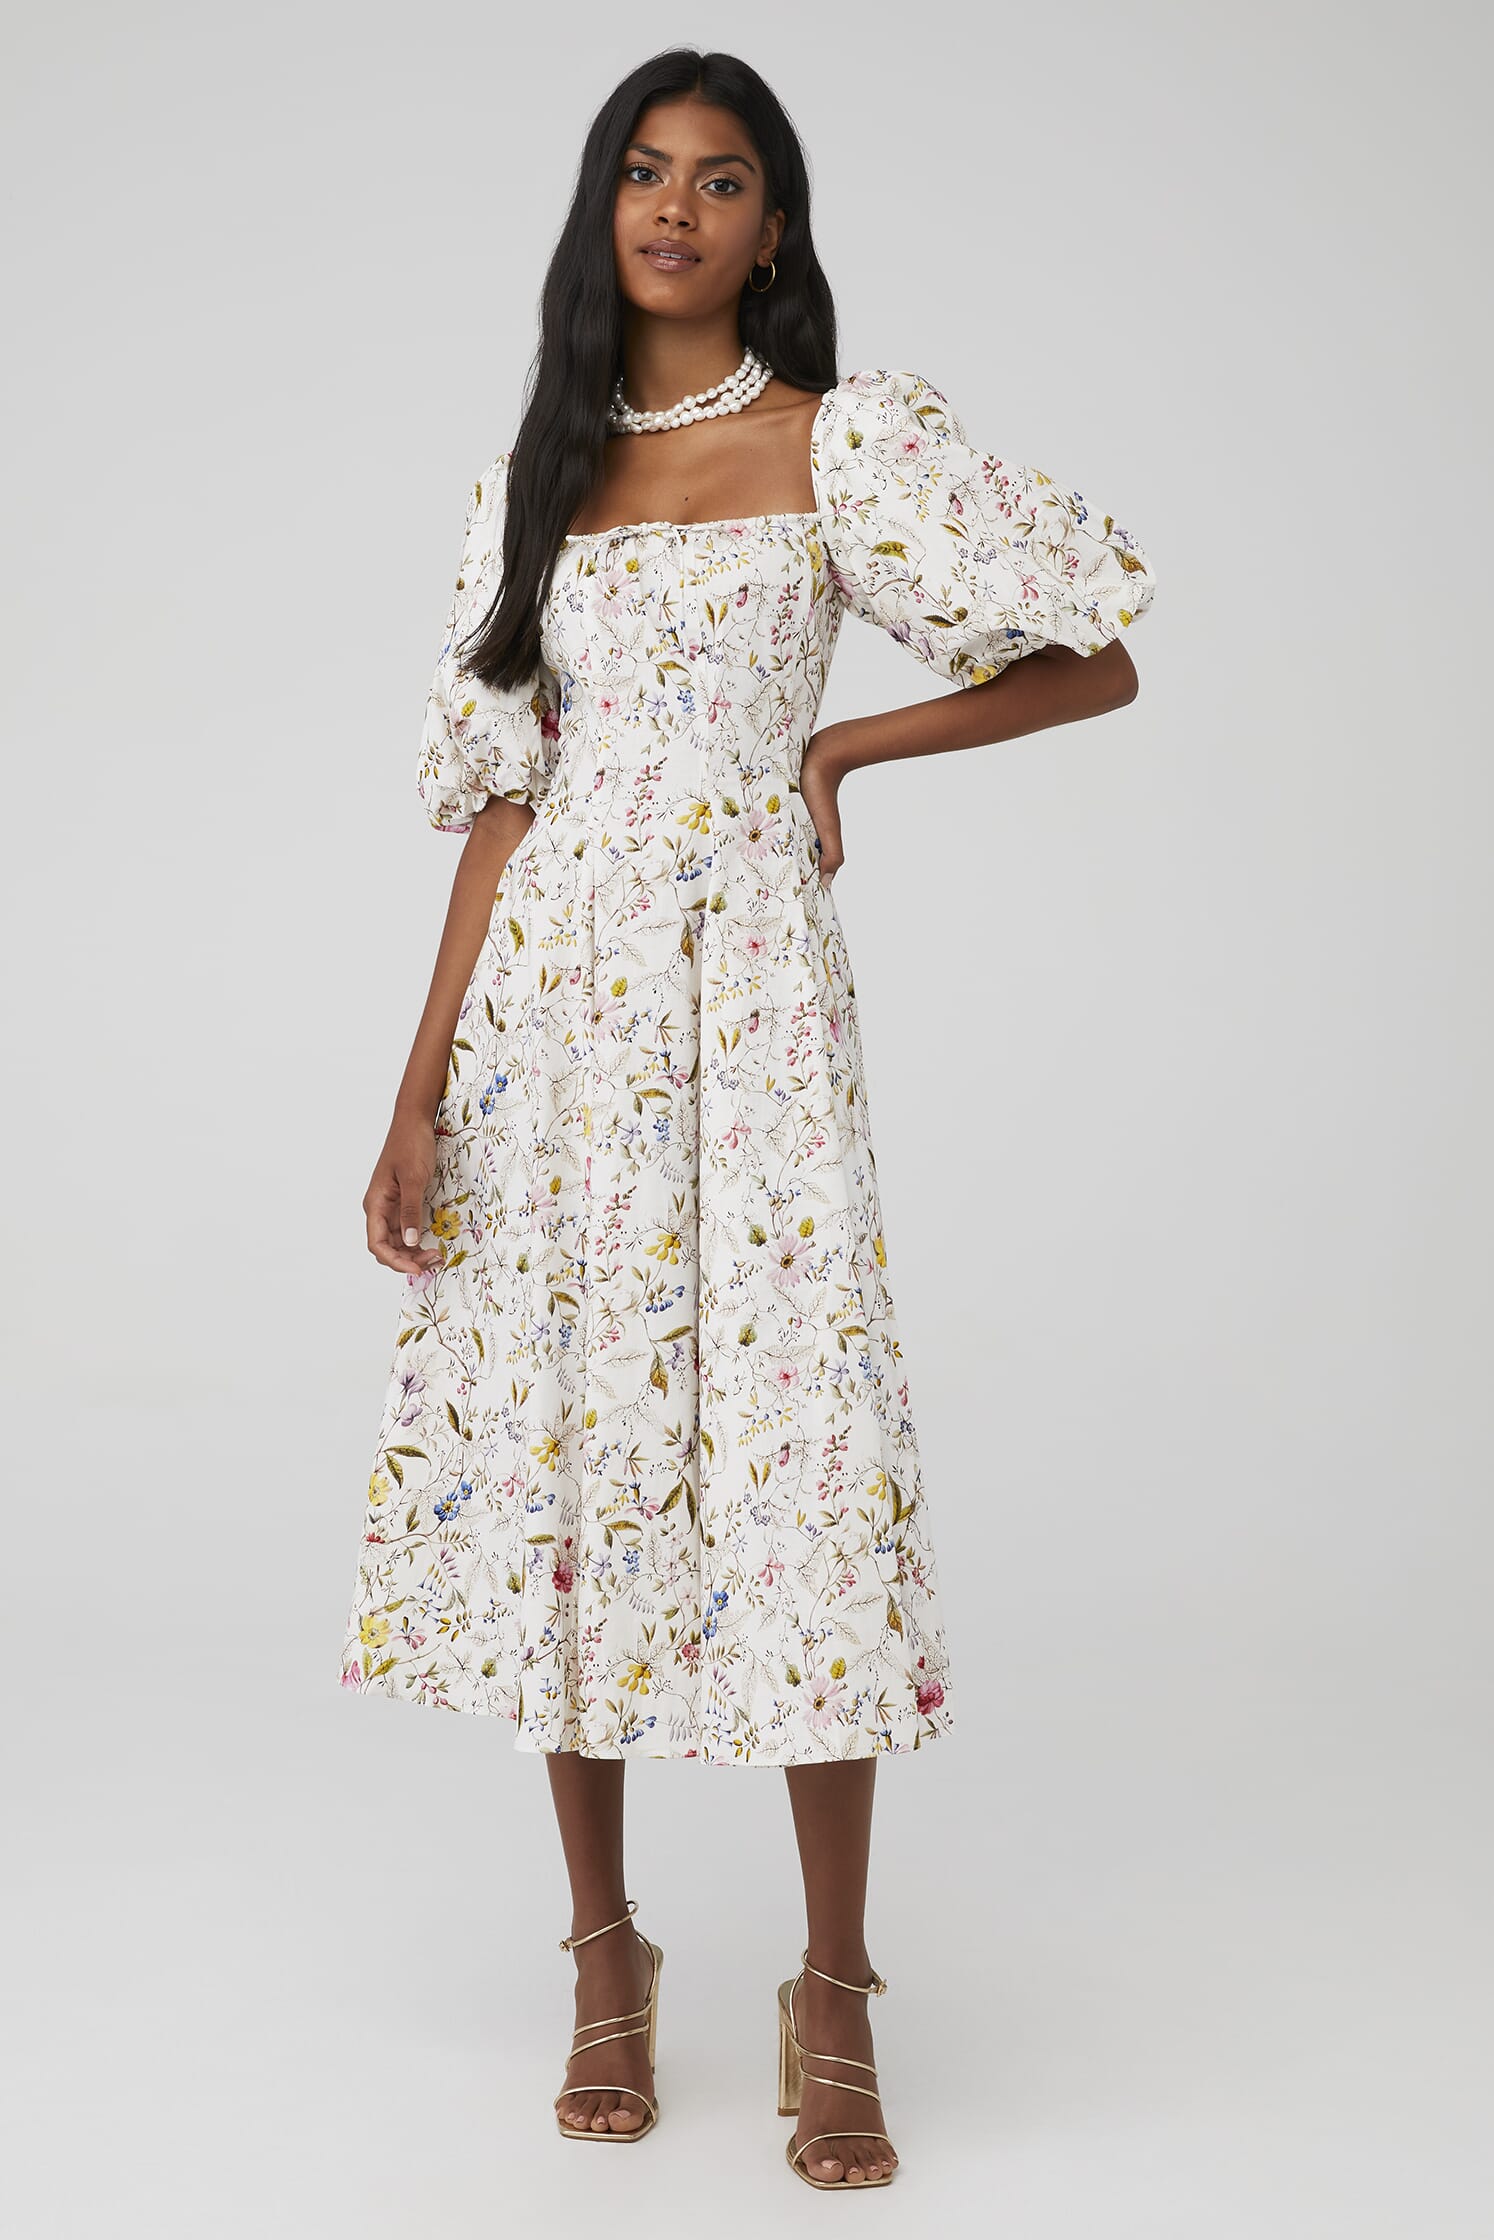 Selkie | Day Dress in Wildflower Kilburn| FashionPass